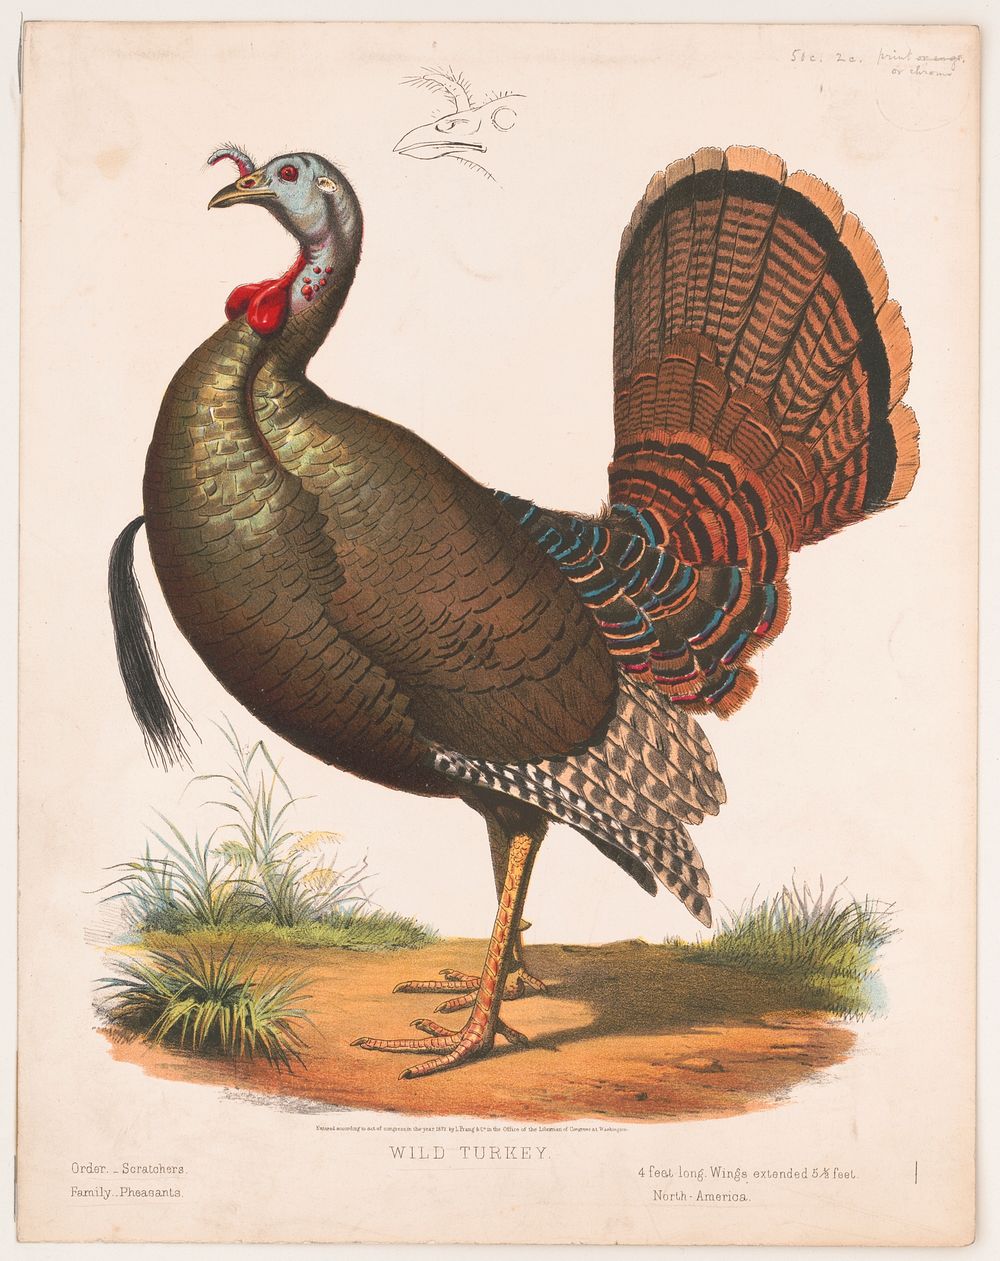 Wild turkey, L. Prang & Co., publisher